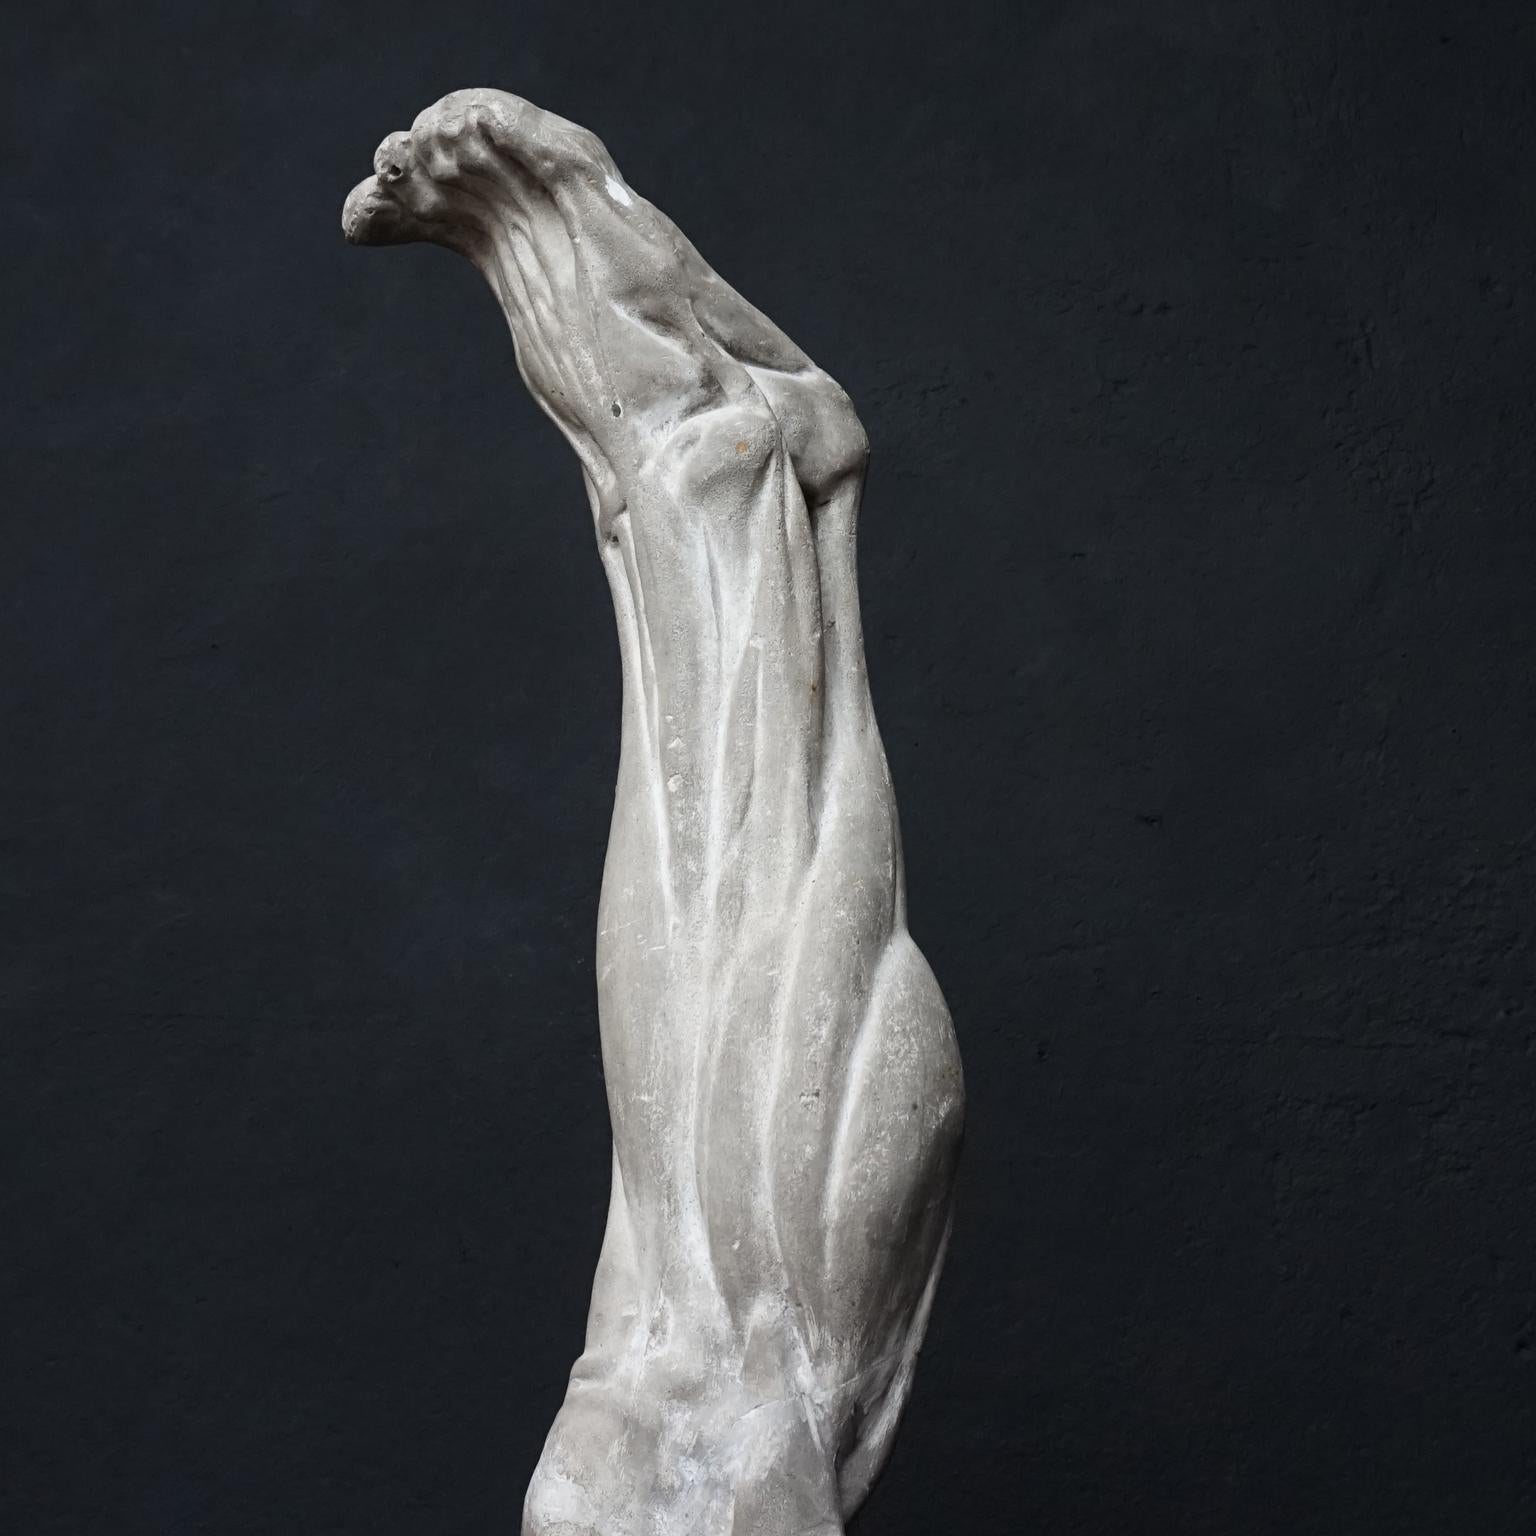 19th Century Plaster Muscle Study of Human Leg from the Rijksacademie, Amsterdam 5